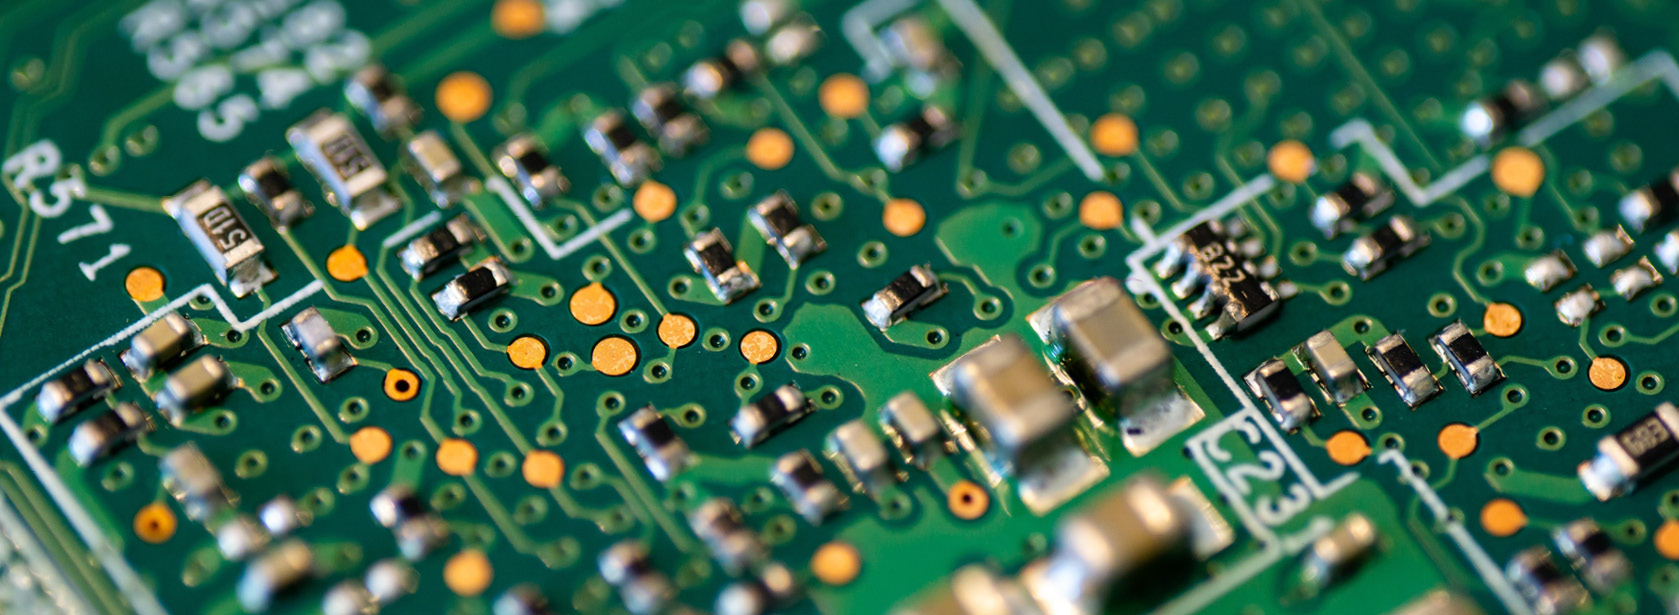 A closeup of a circuit board.